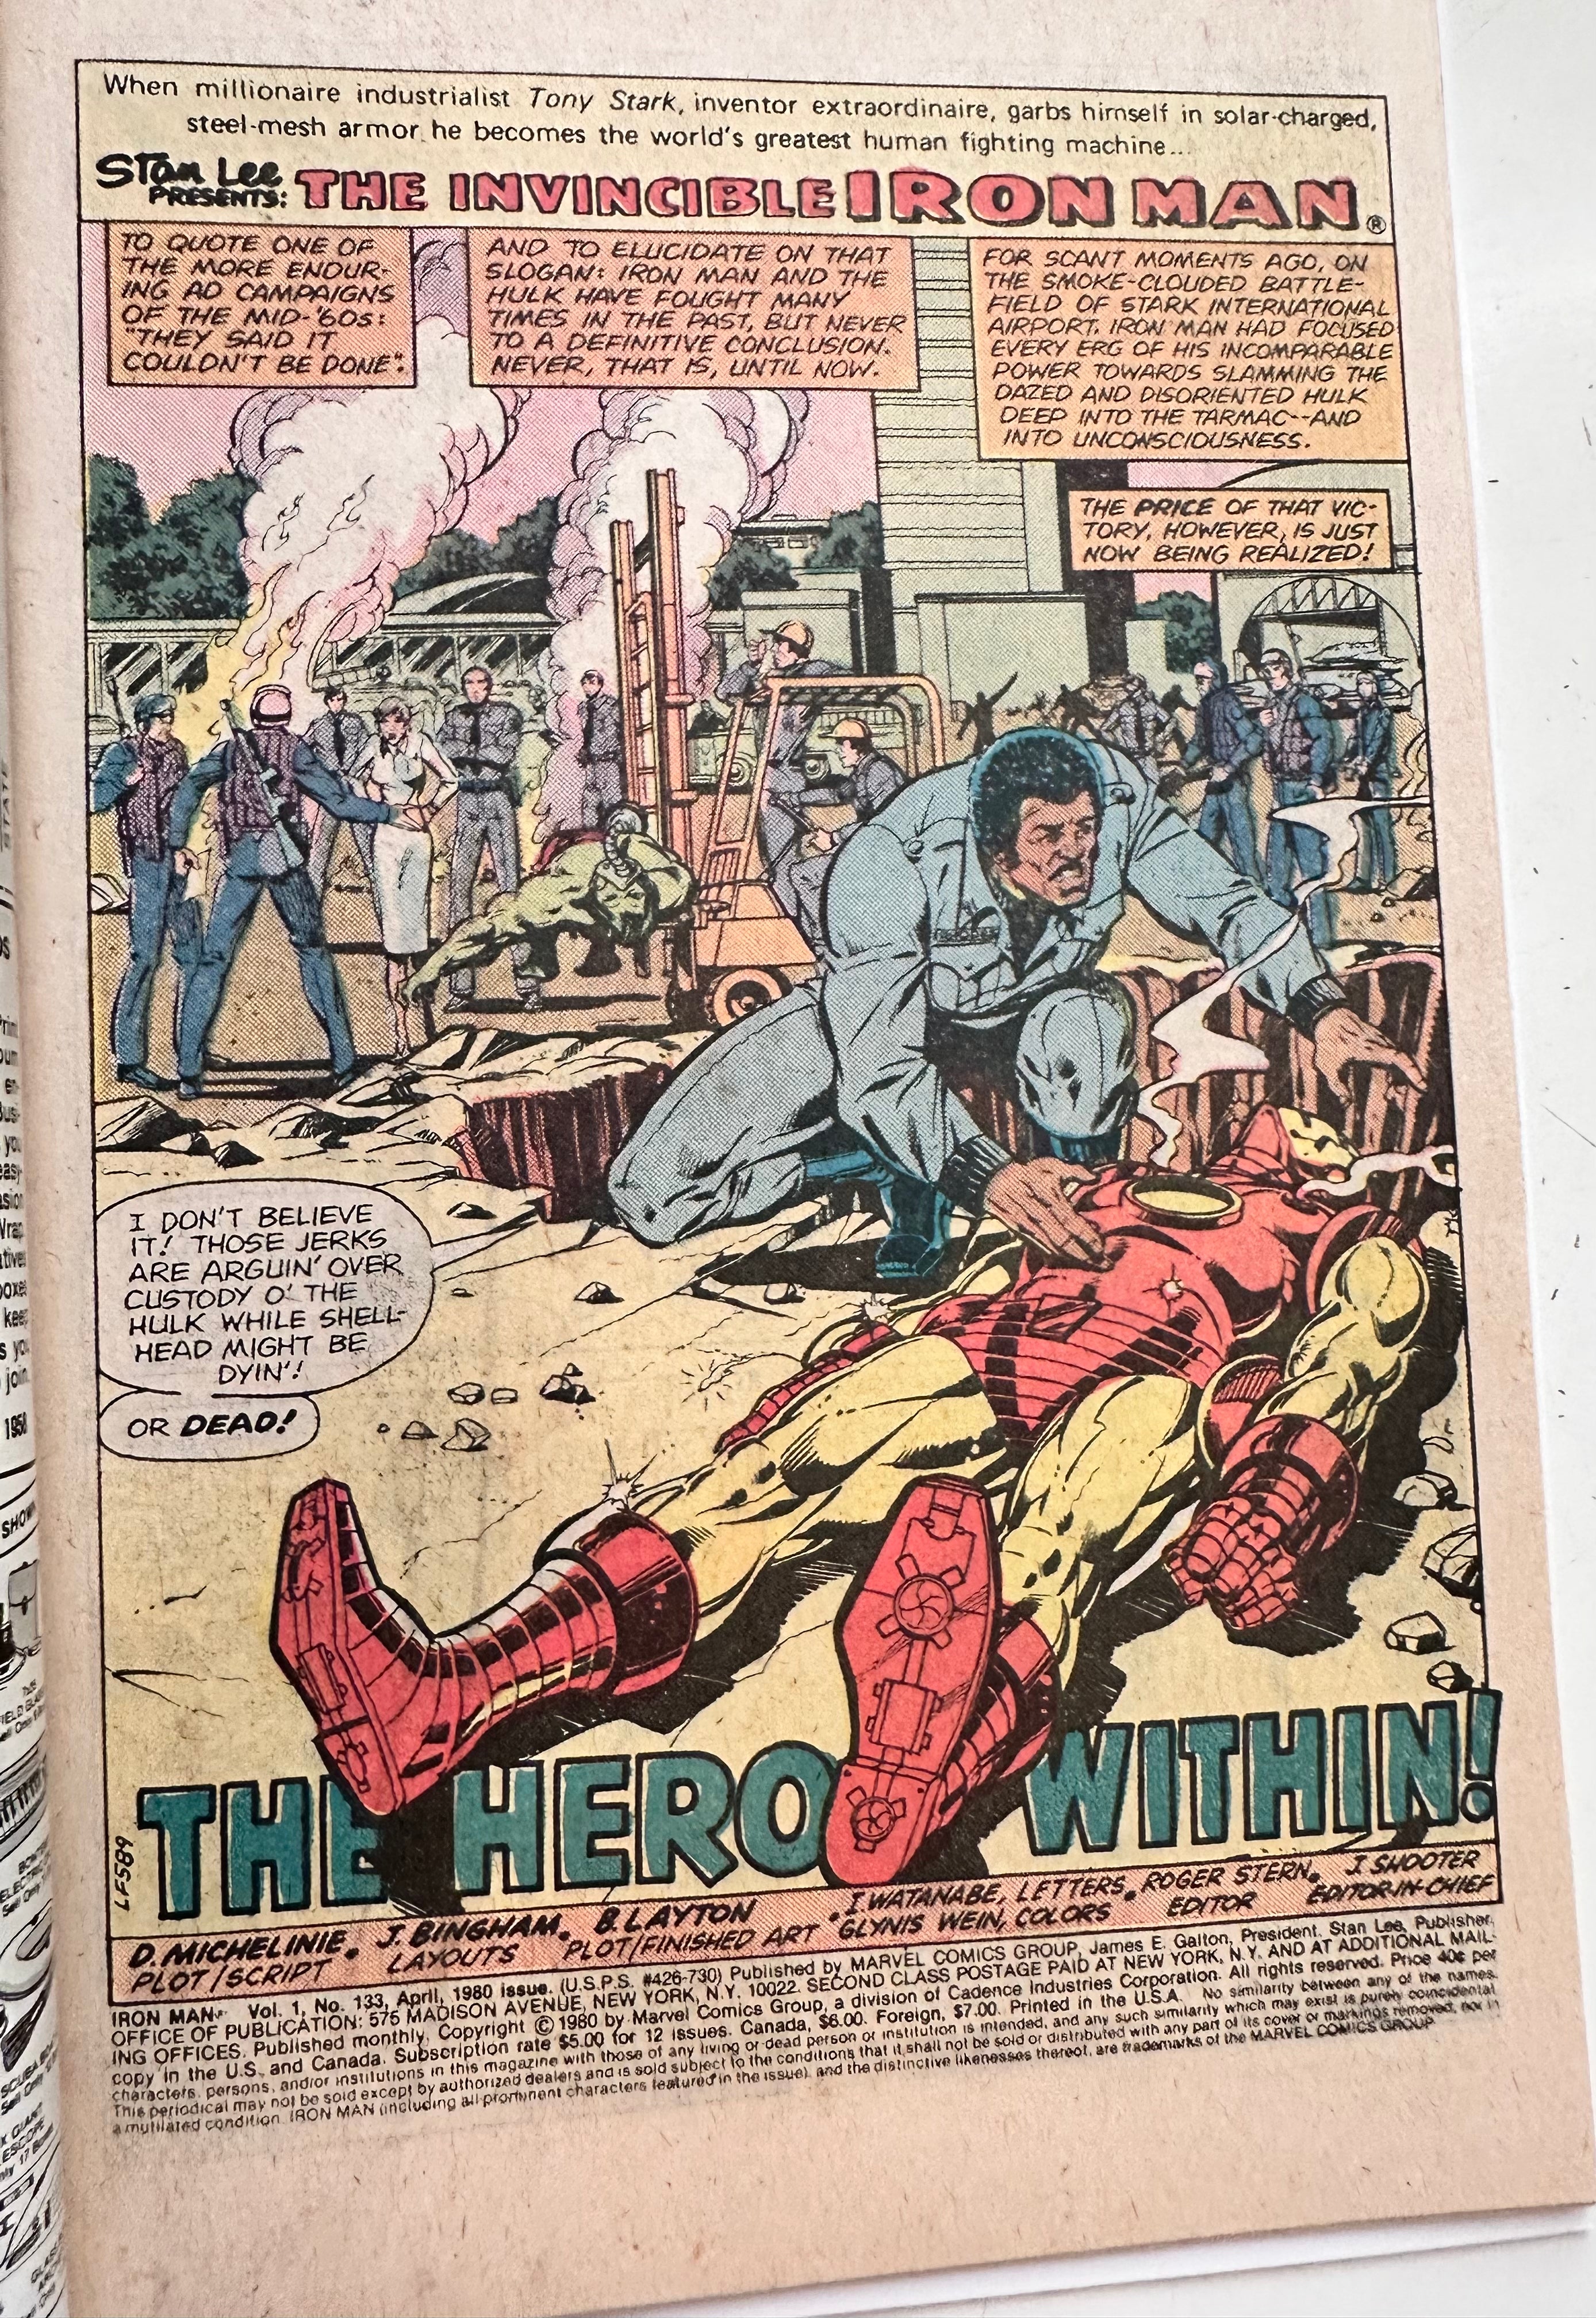 Iron Man #133 high grade comic book 1980